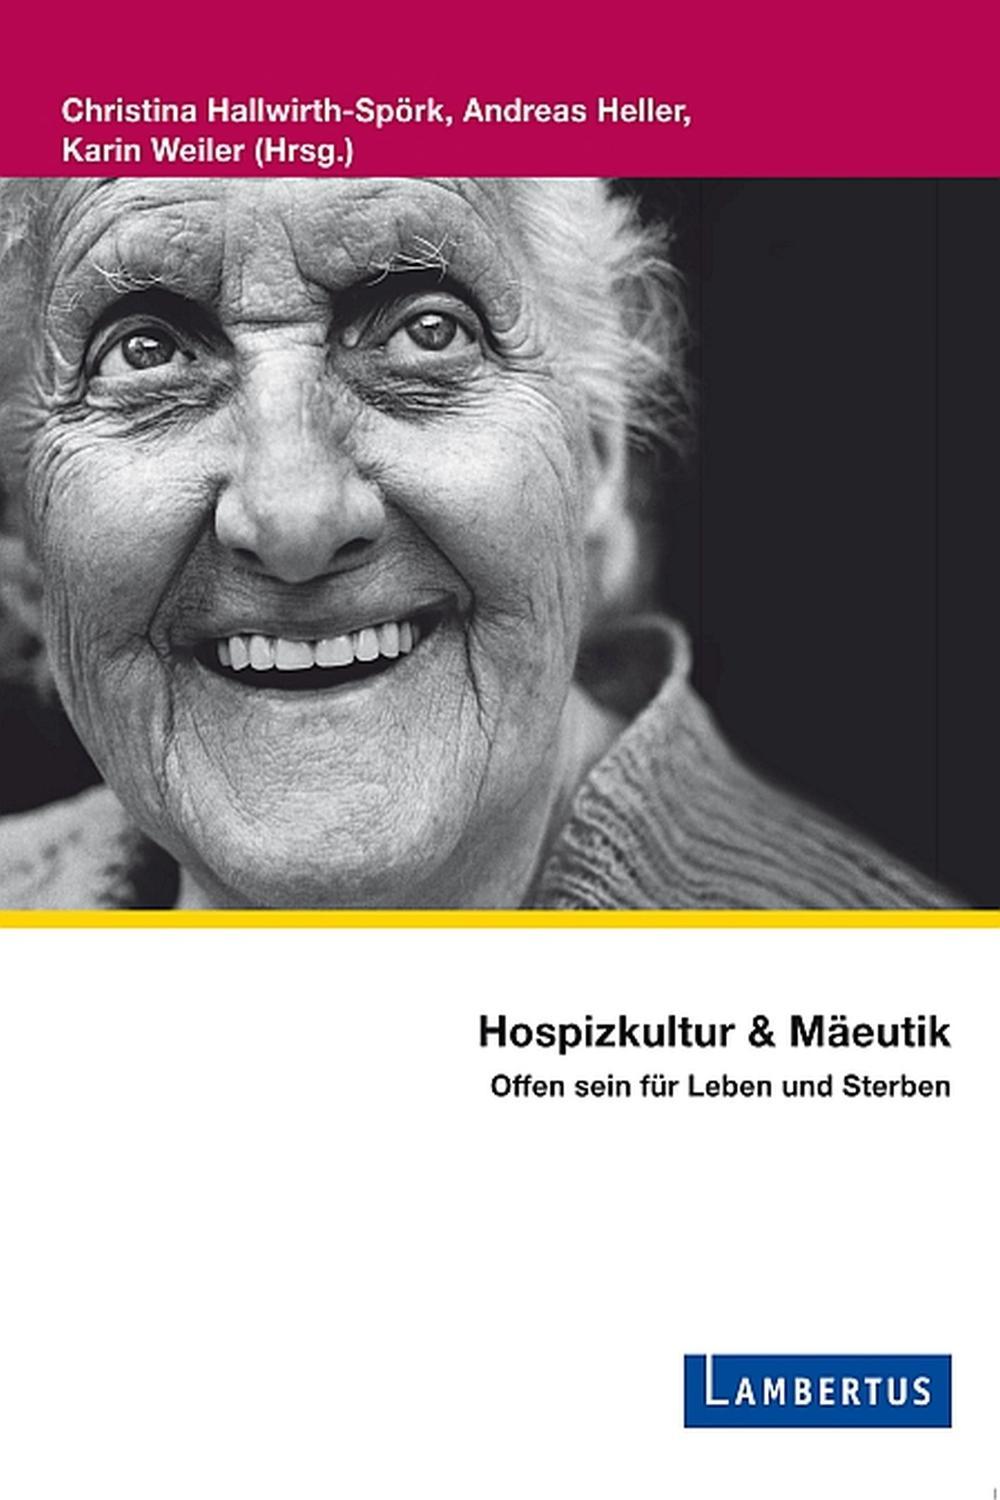 Hospizkultur und Mäeutik - Christina Hallwirth-Spörk, Andreas Heller, Karin Weiler